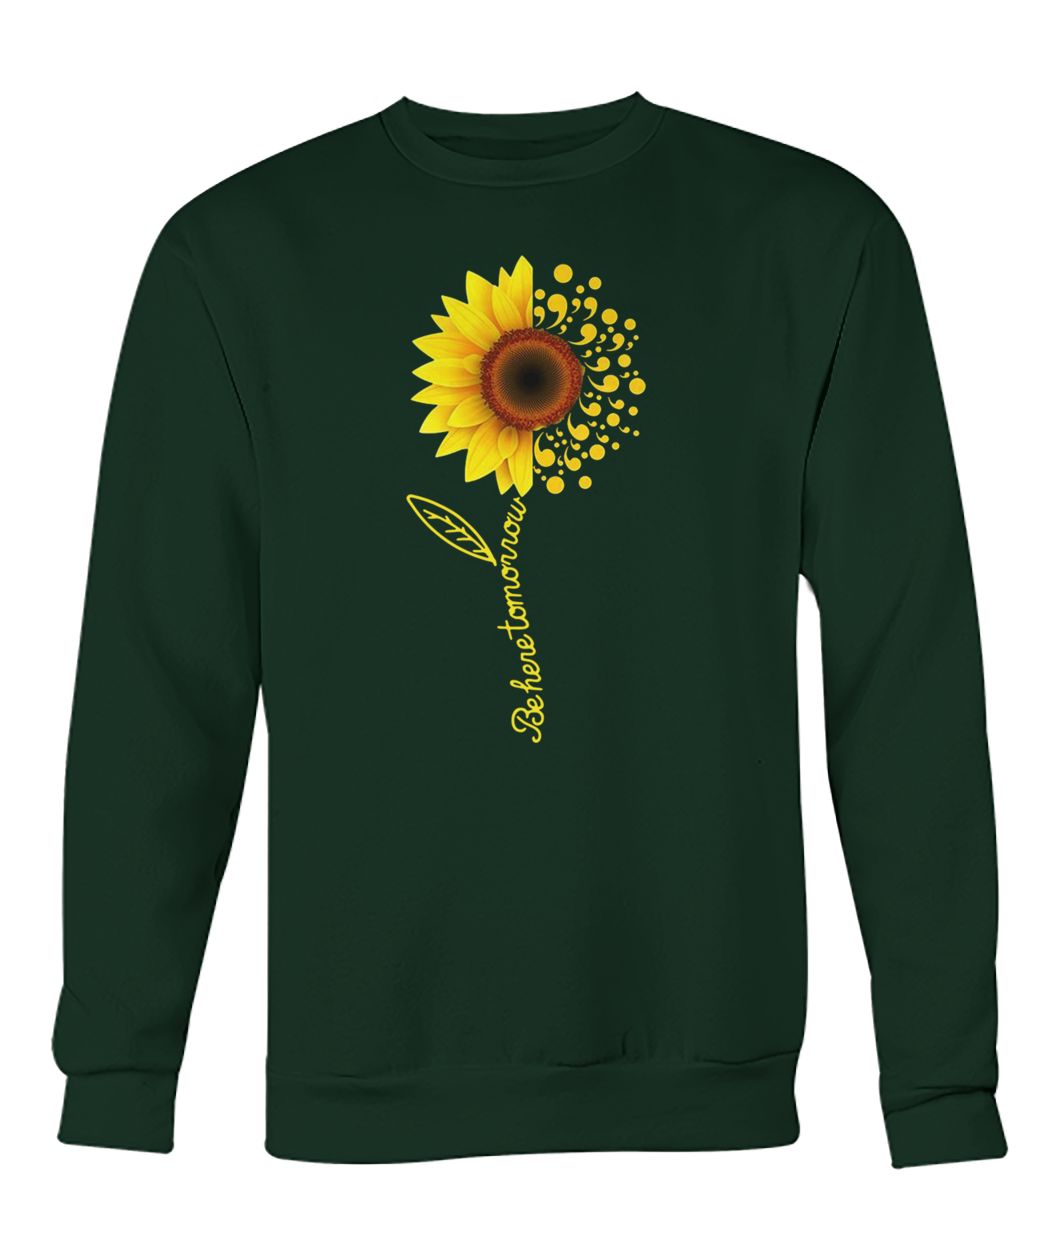 Comma sunflower be here tomorrow crew neck sweatshirt